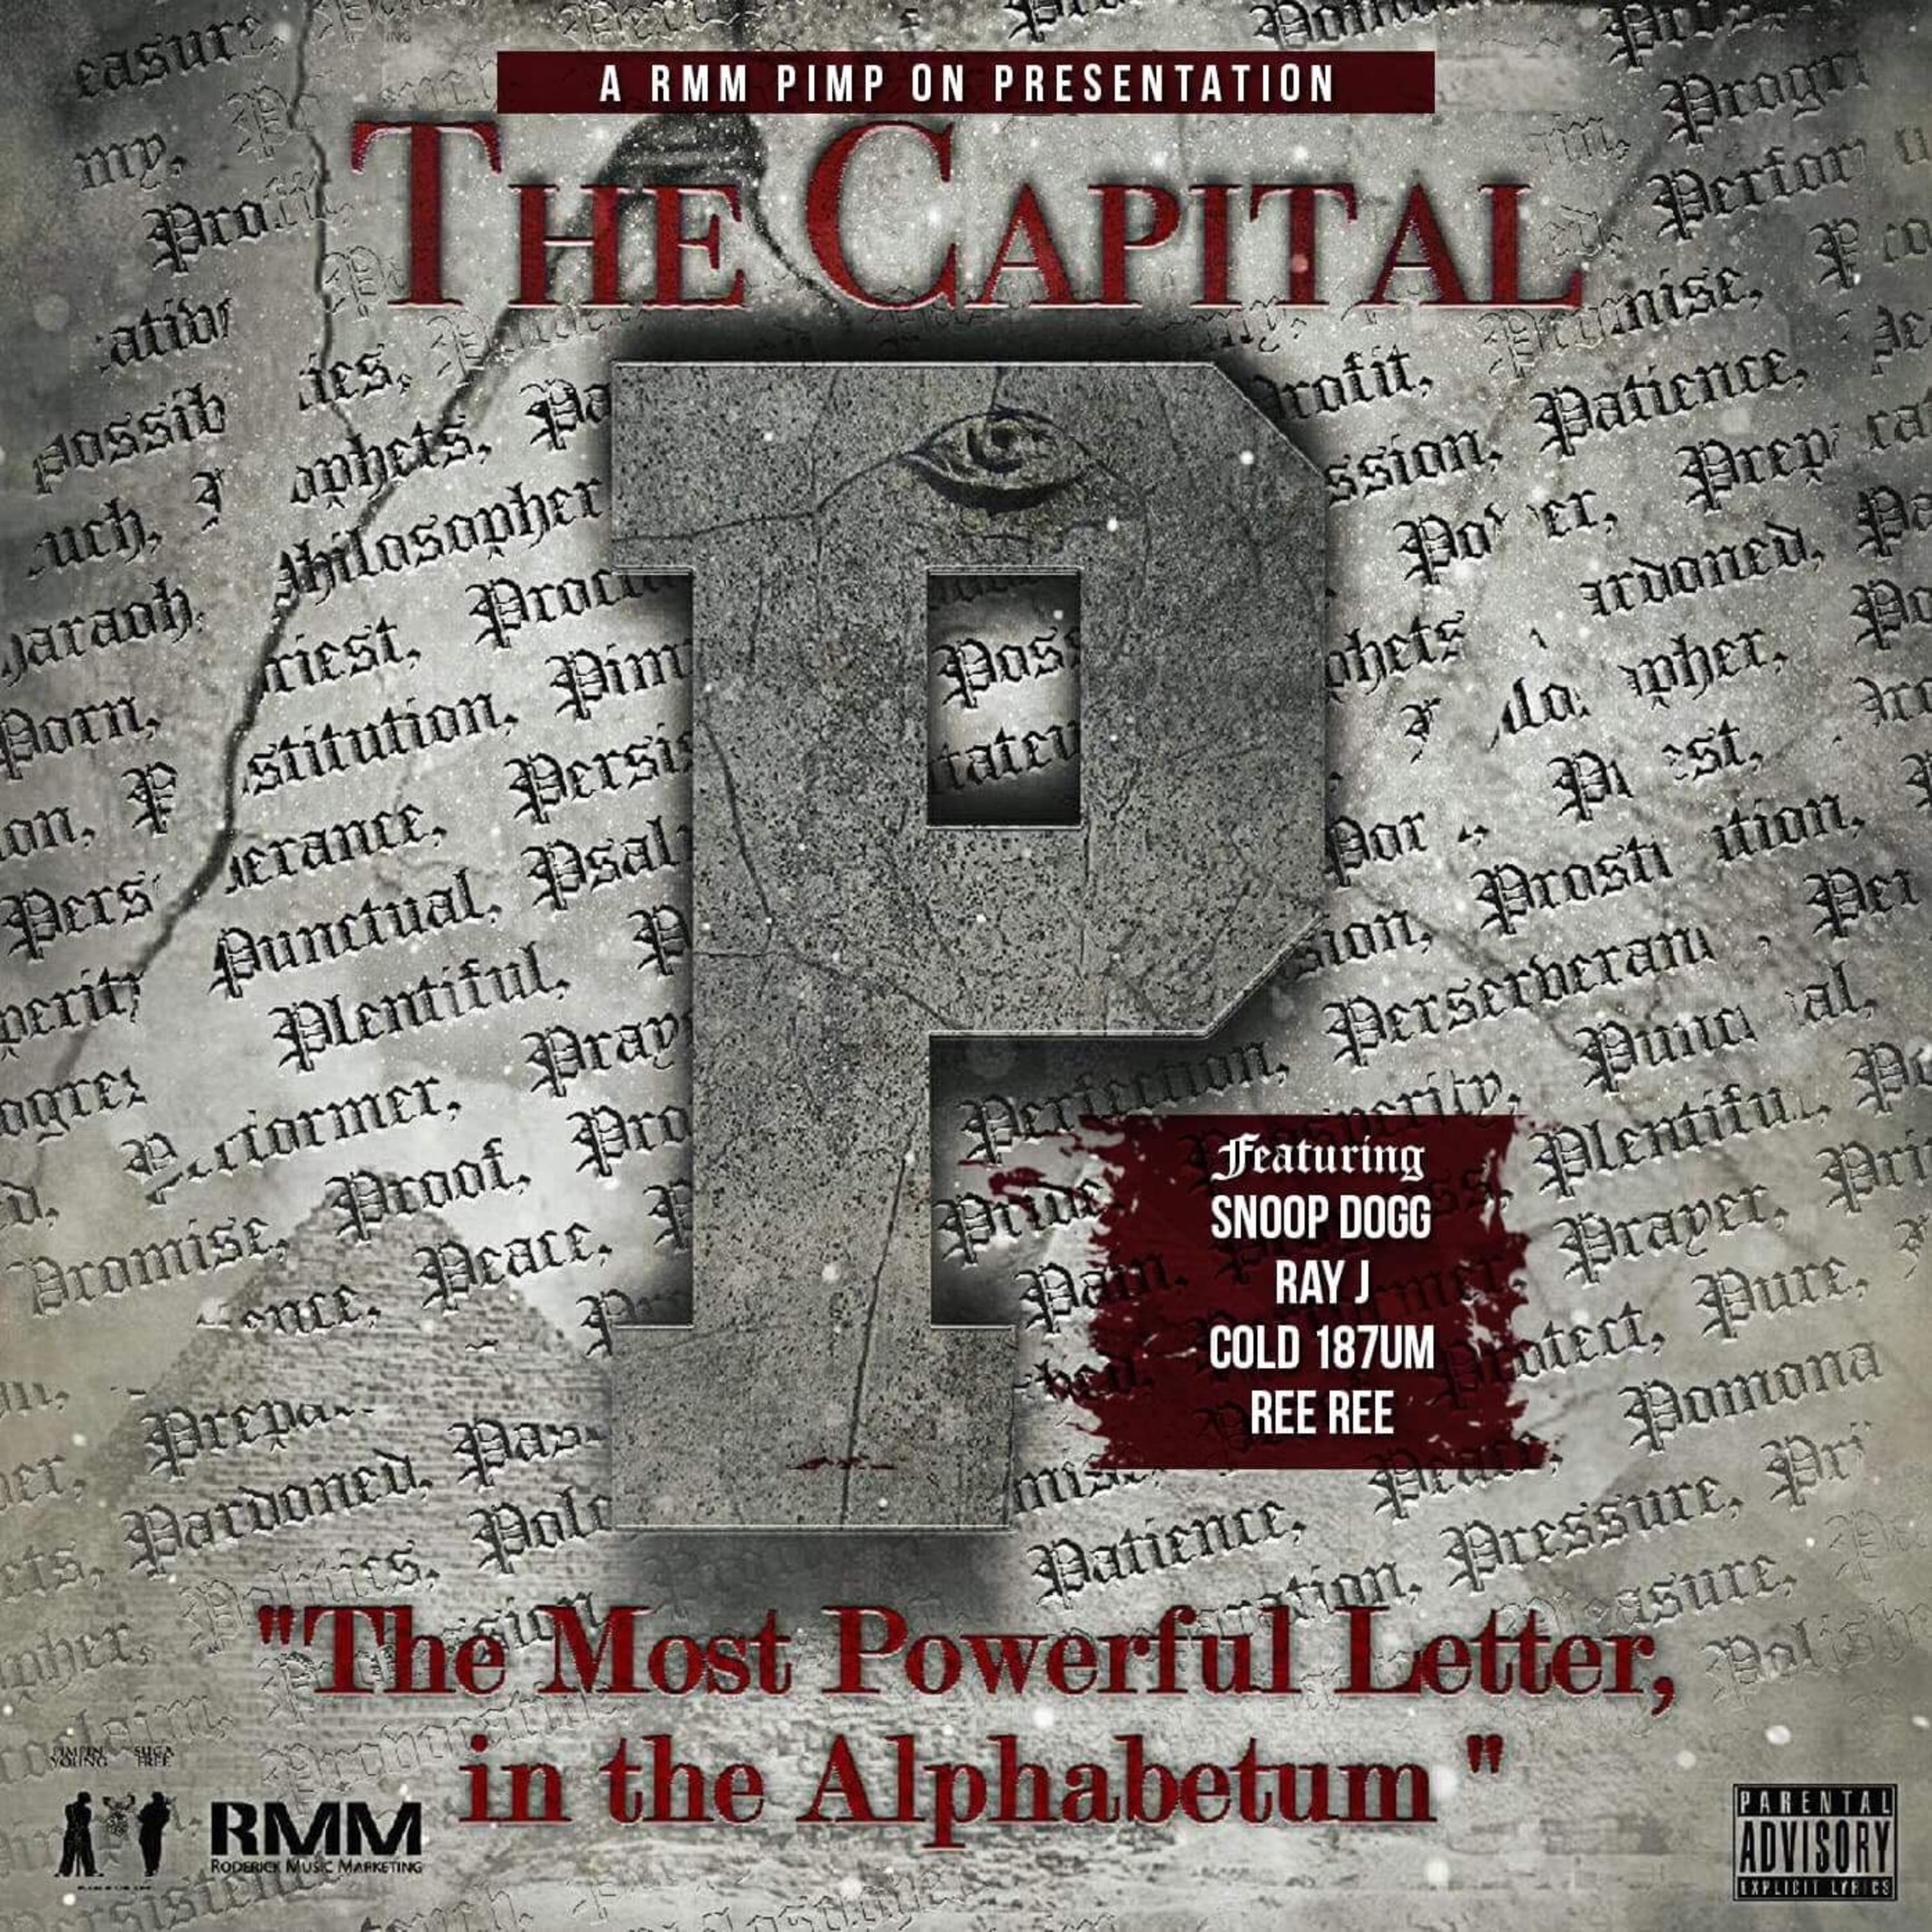 The Capital P